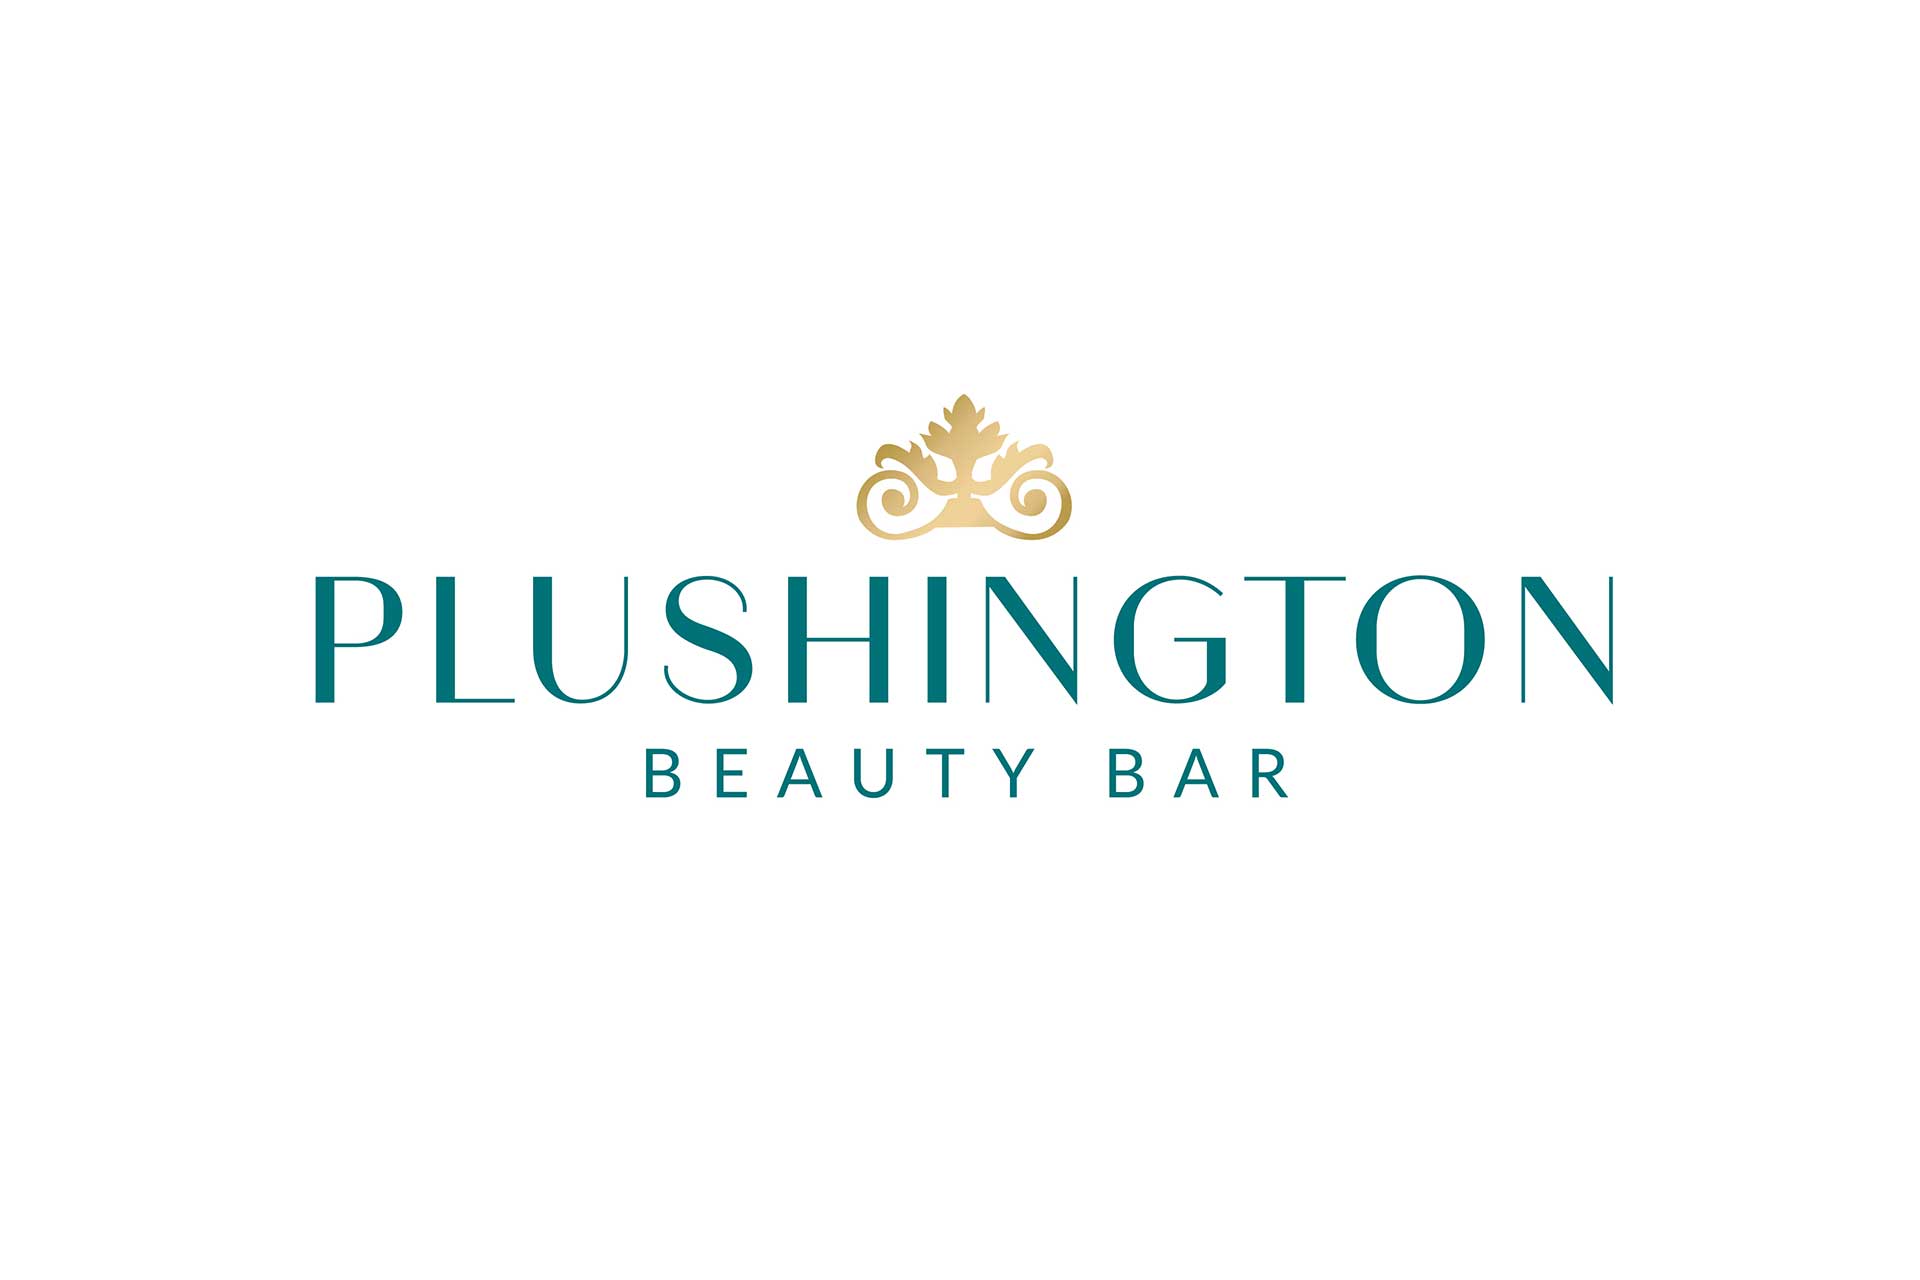 Plushington beauty bar logo - White Canvas Design